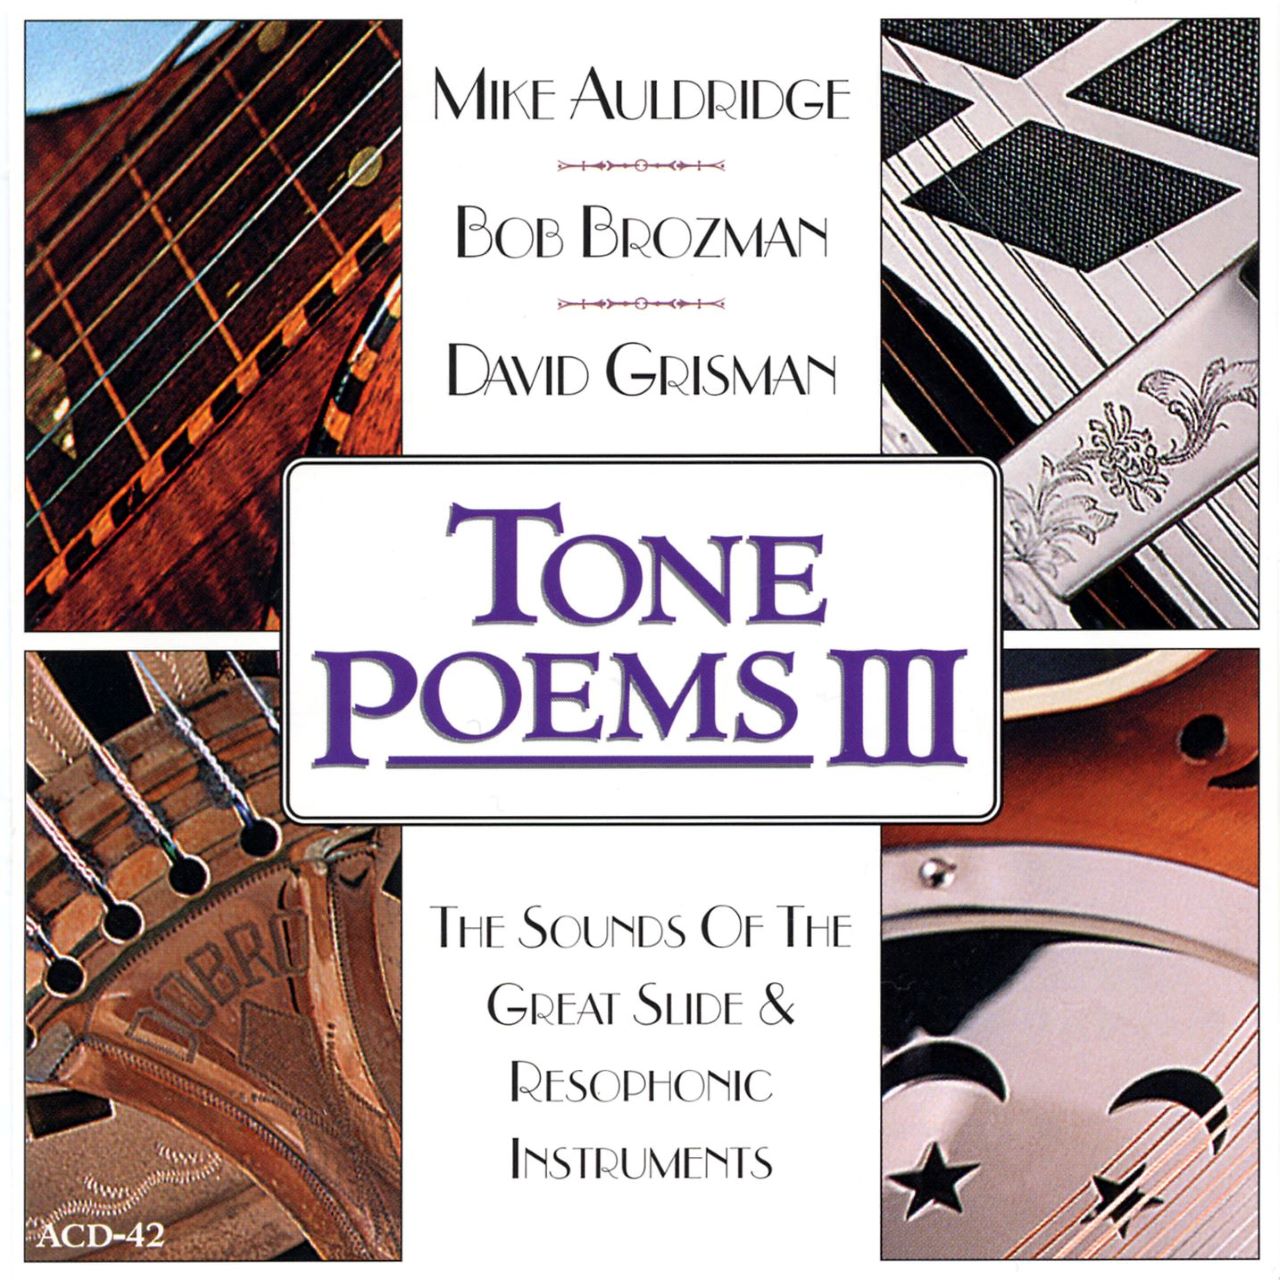 Grisman, Auldridge, Brozman - Tone Poems III - The Sounds Of The Great Slide & Resophonic cover album